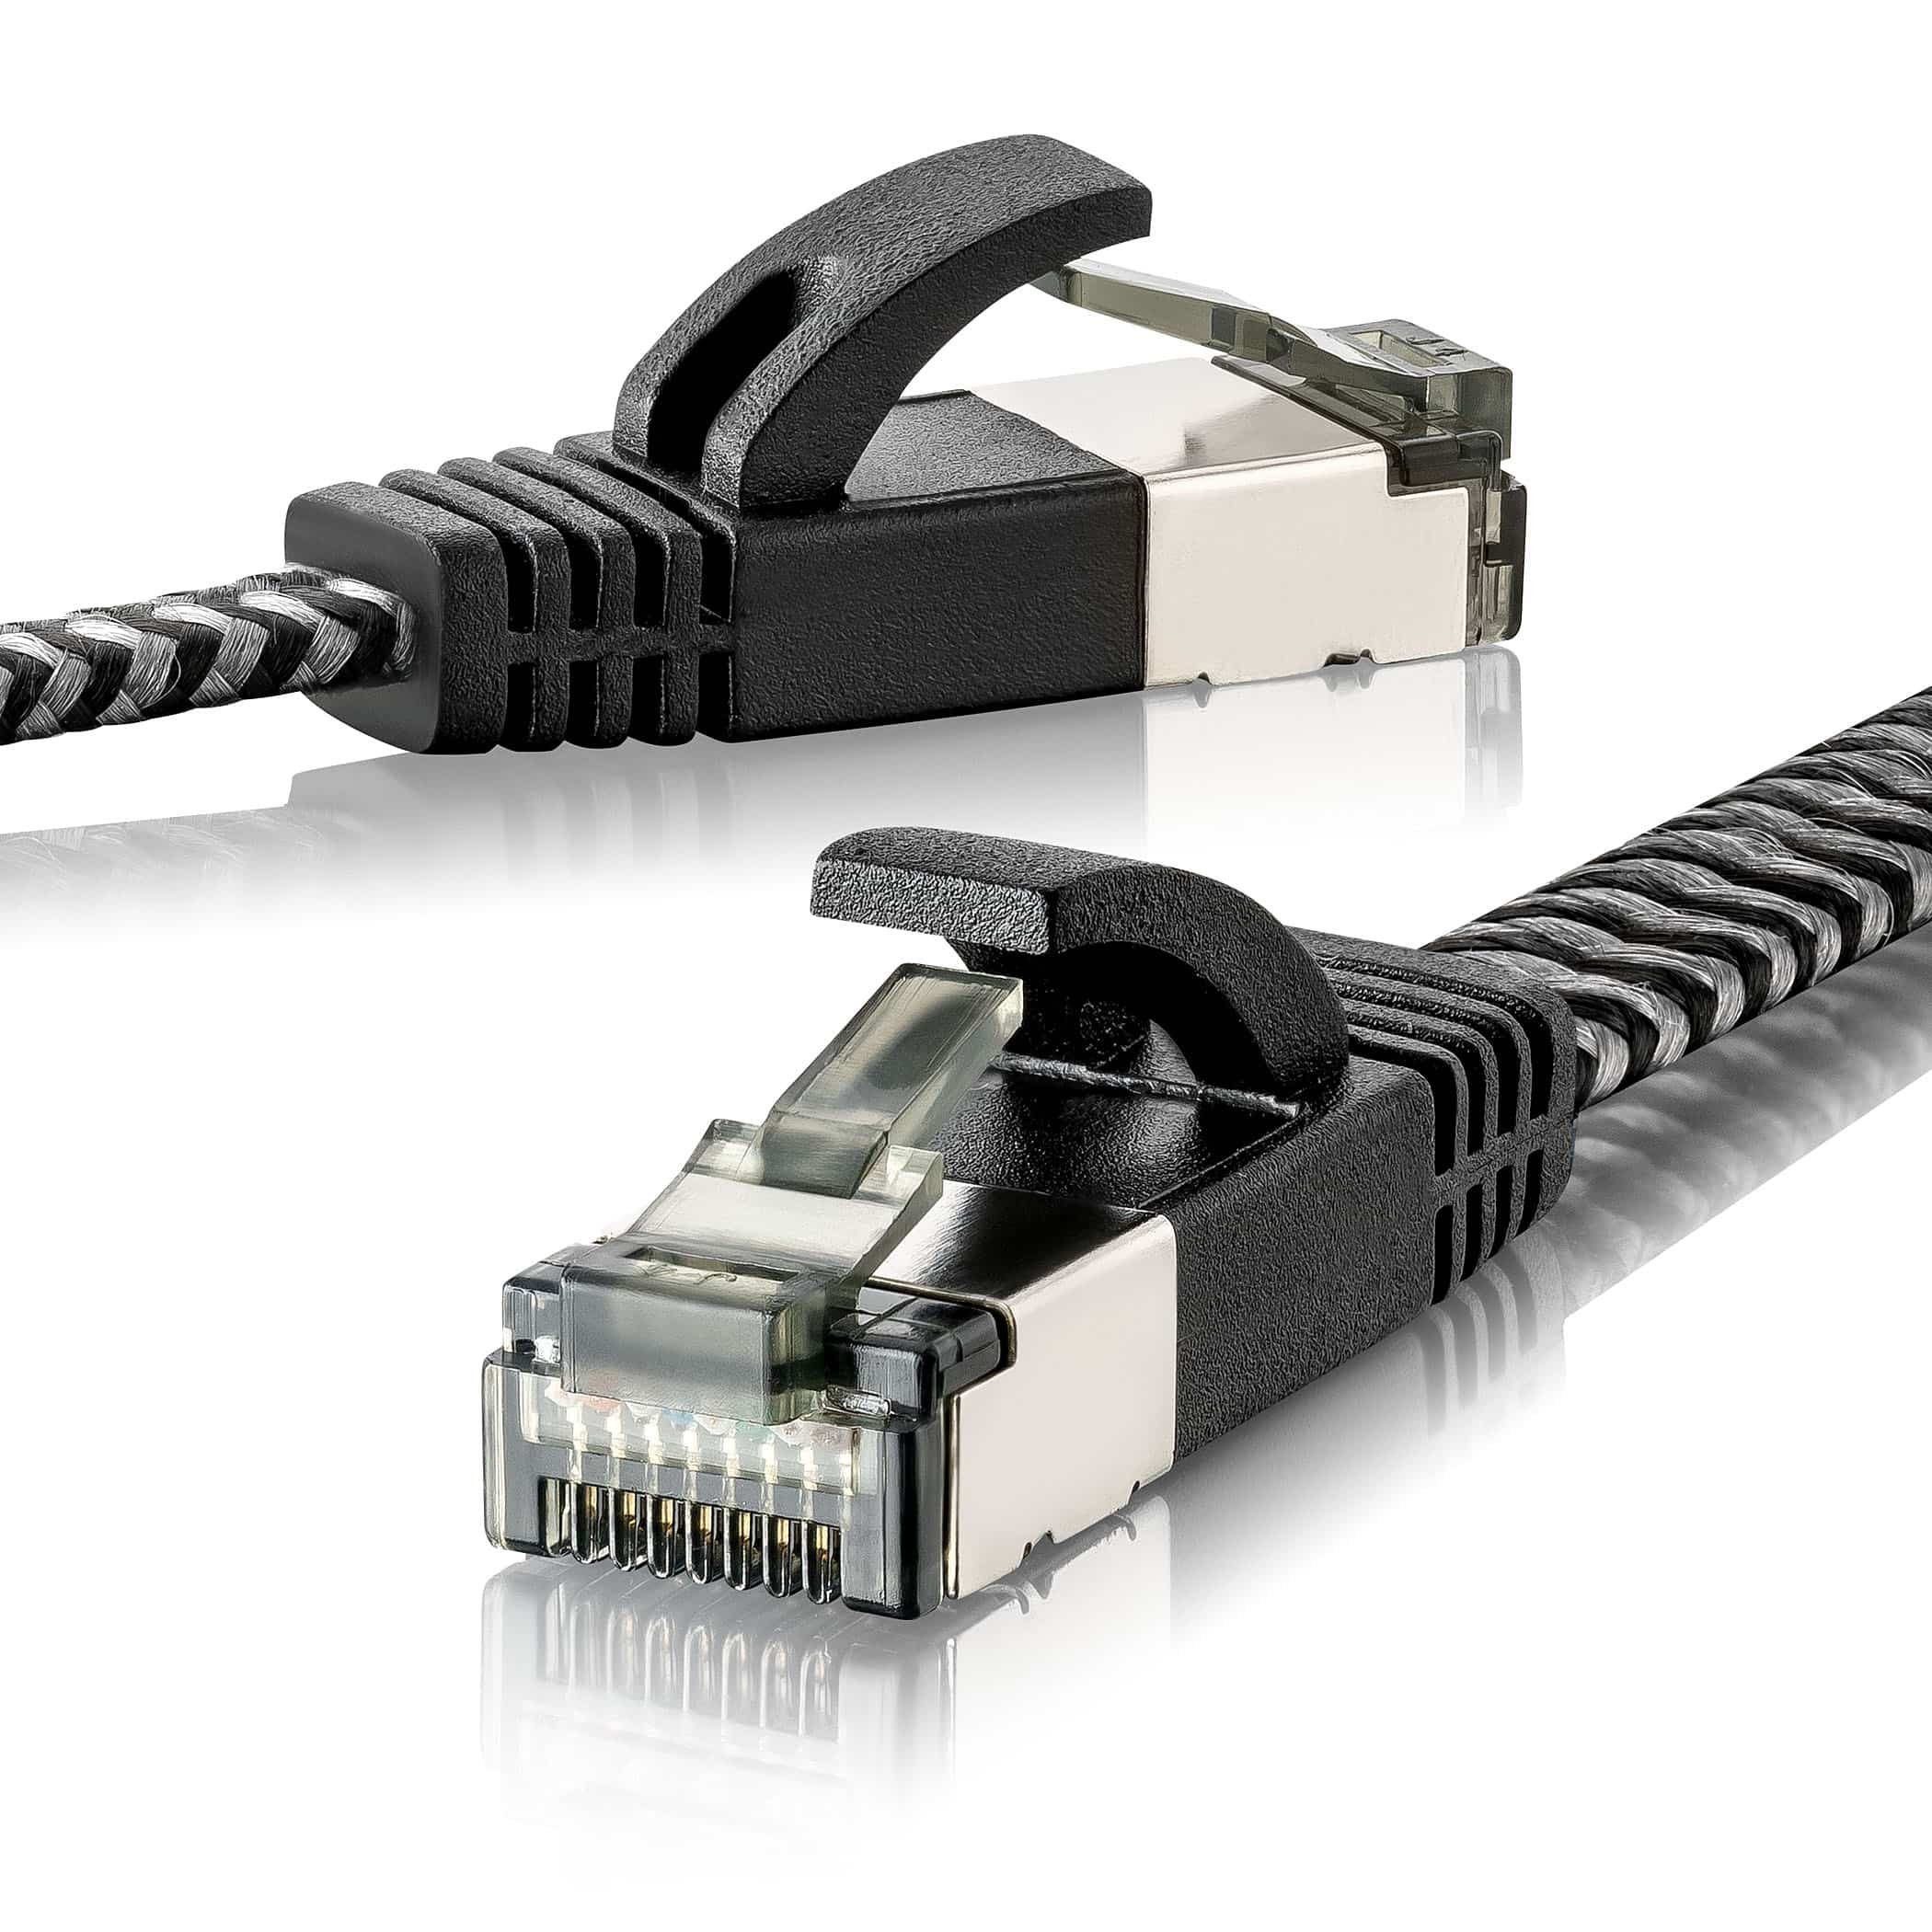 SEBSON »LAN Kabel 3m CAT 7 flach, Netzwerkkabel 10 Gbit/s, RJ45 Stecker für  Router, PC, TV, NAS, Spielekonsolen - Ethernet Kabel U-FTP abgeschirmt«  Netzkabel online kaufen | OTTO